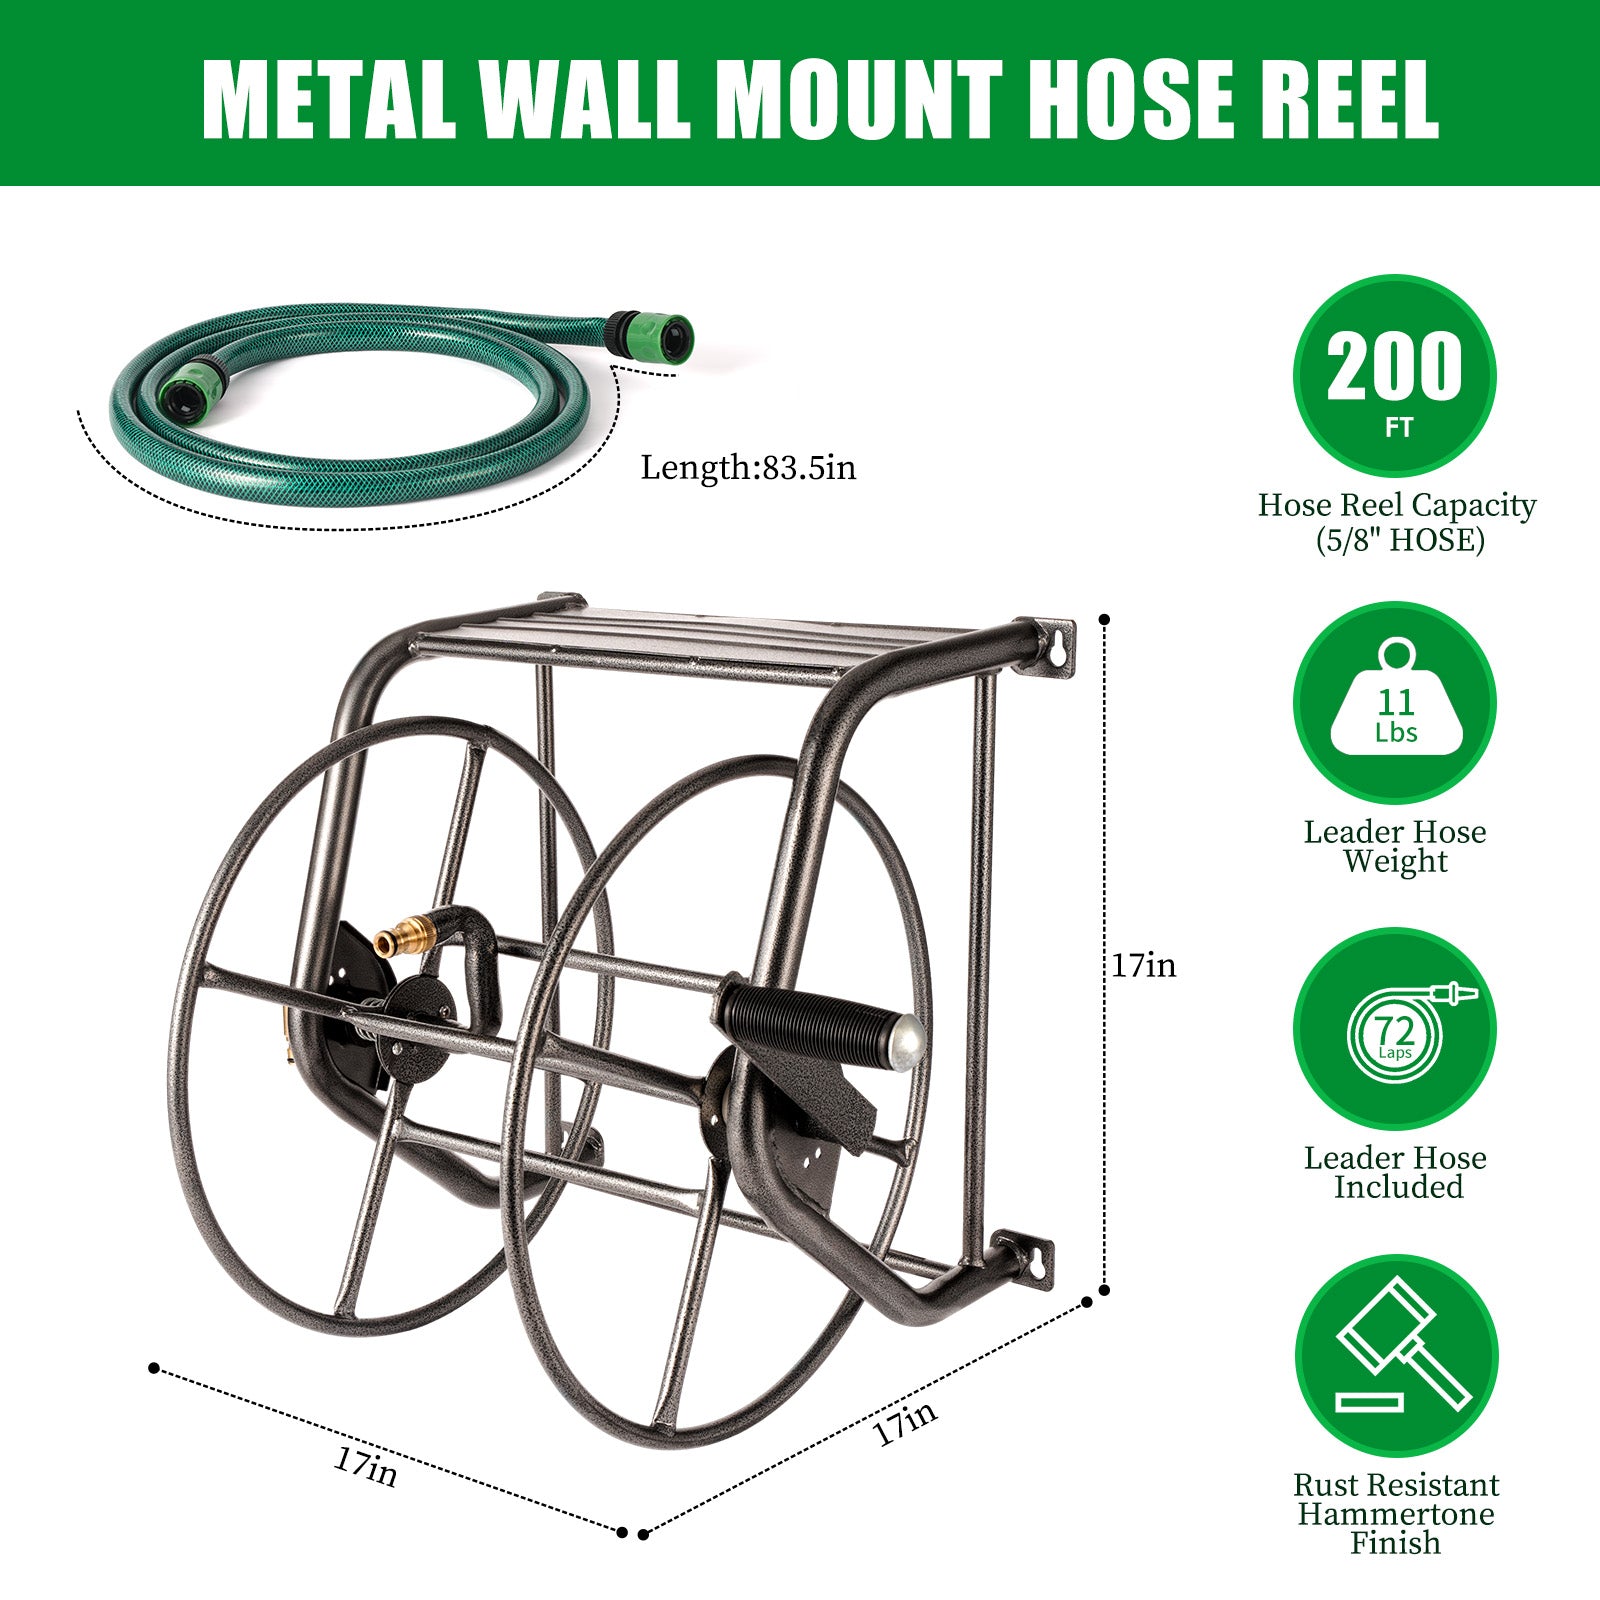 Metal Wall Mounted Hose Reel - Hammertone Grey, 200ft Capacity